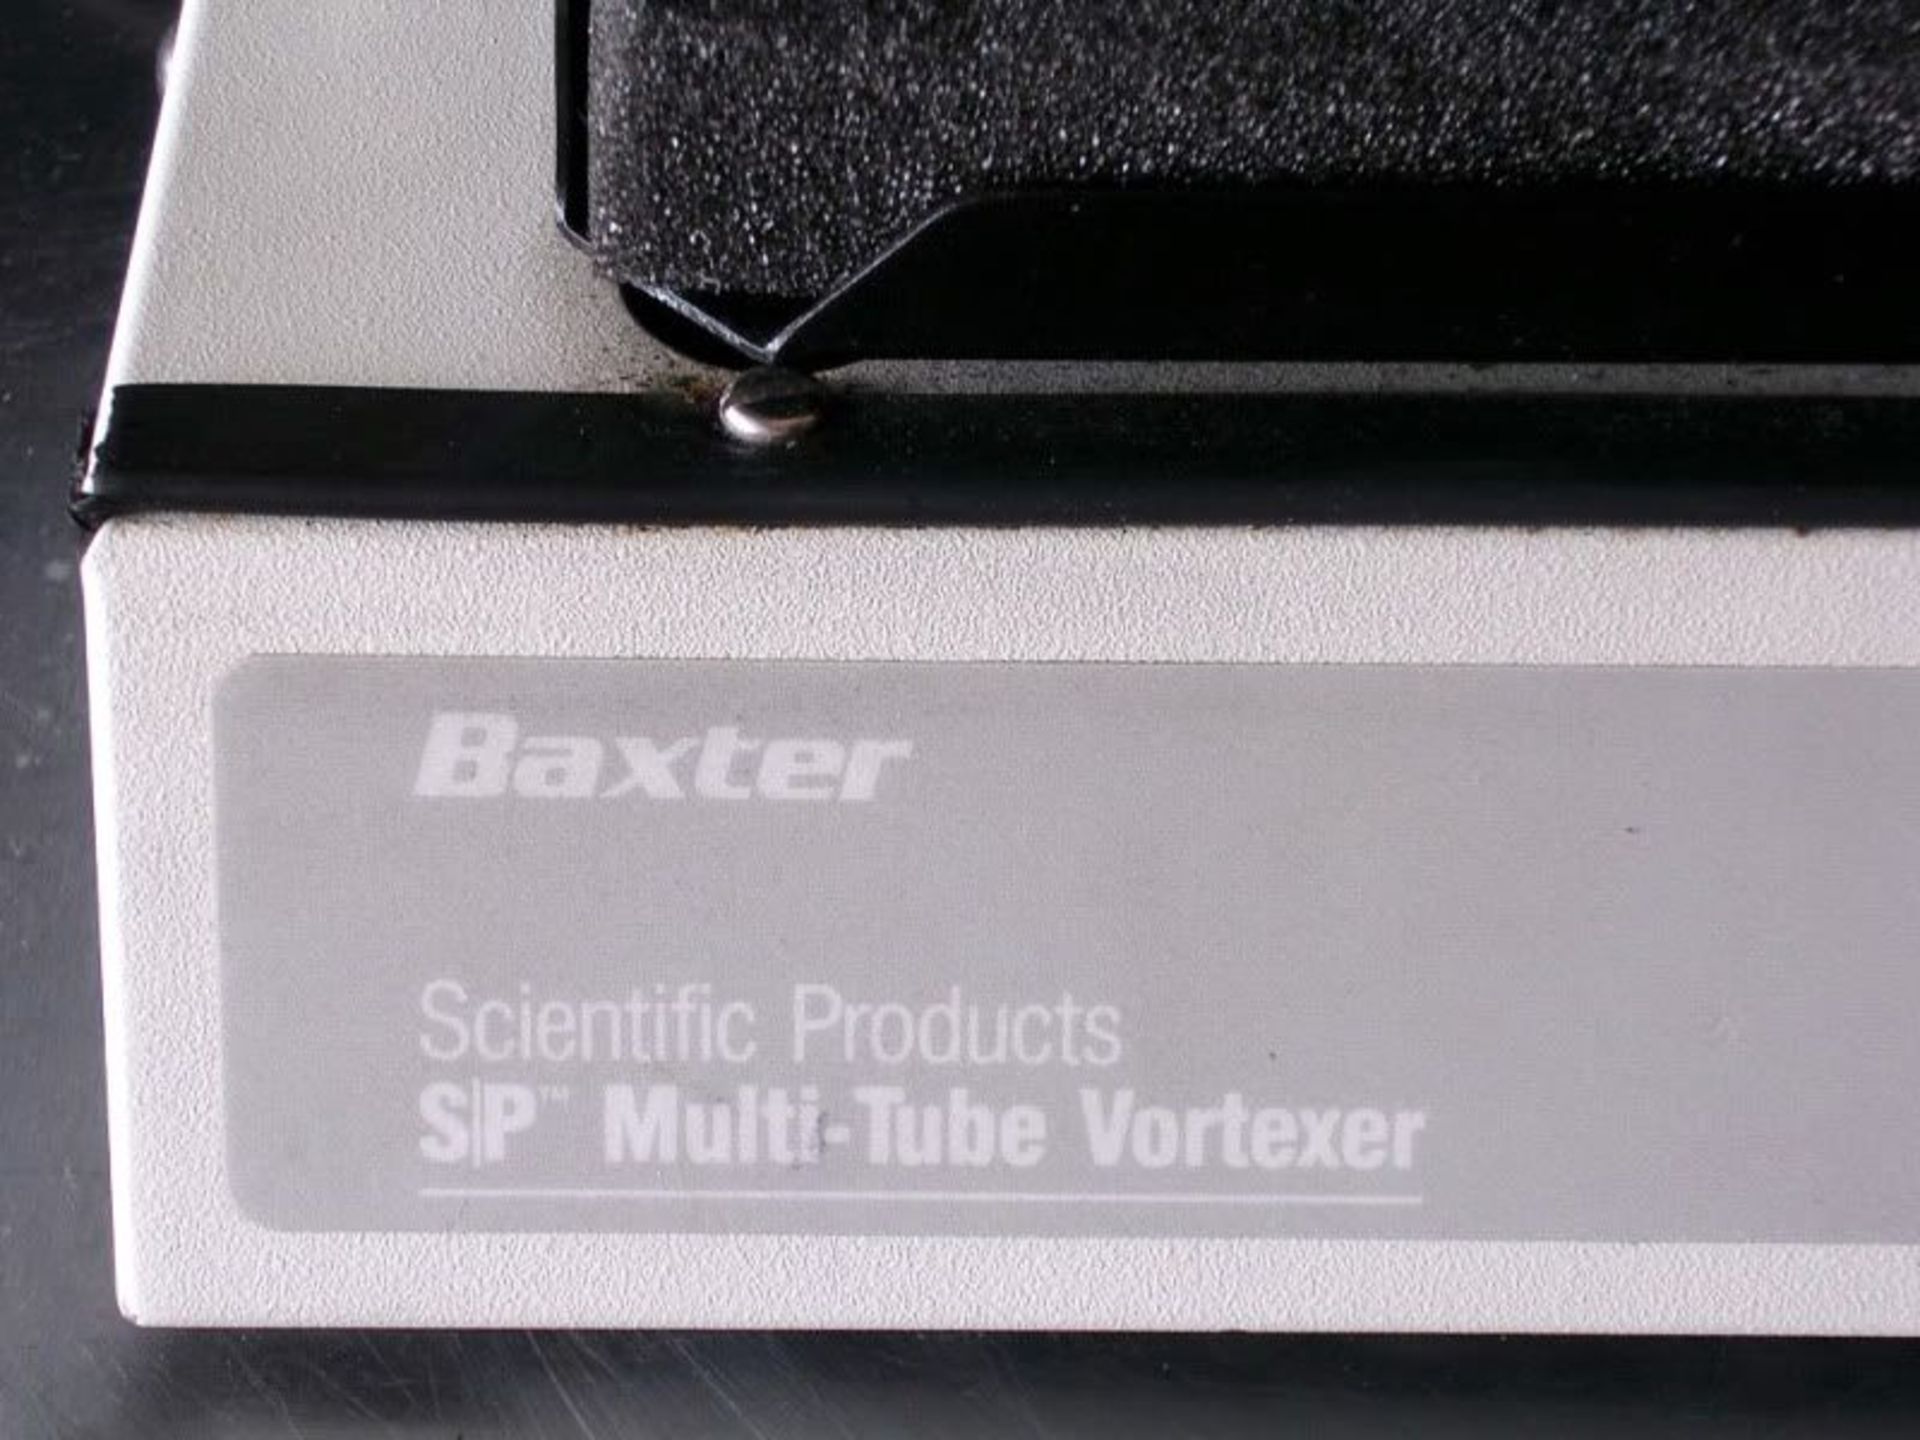 Baxter S/P Multi-Tube Vortexer, SP Multi Tube, Qty 1, 222227683752 - Image 2 of 6